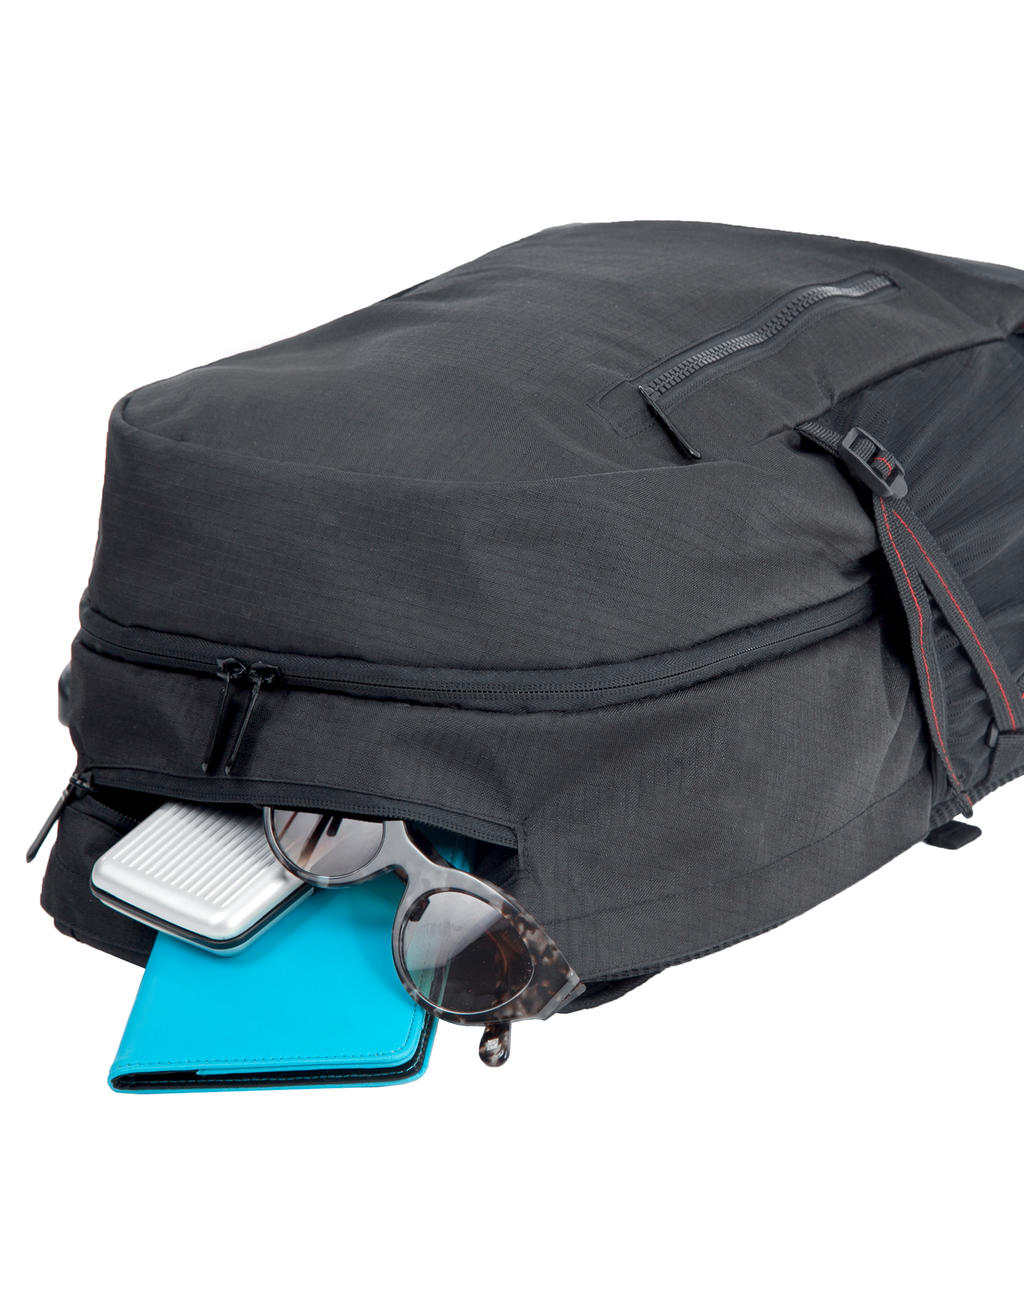  Leipzig Daily Laptop Backpack in Farbe Black/Black